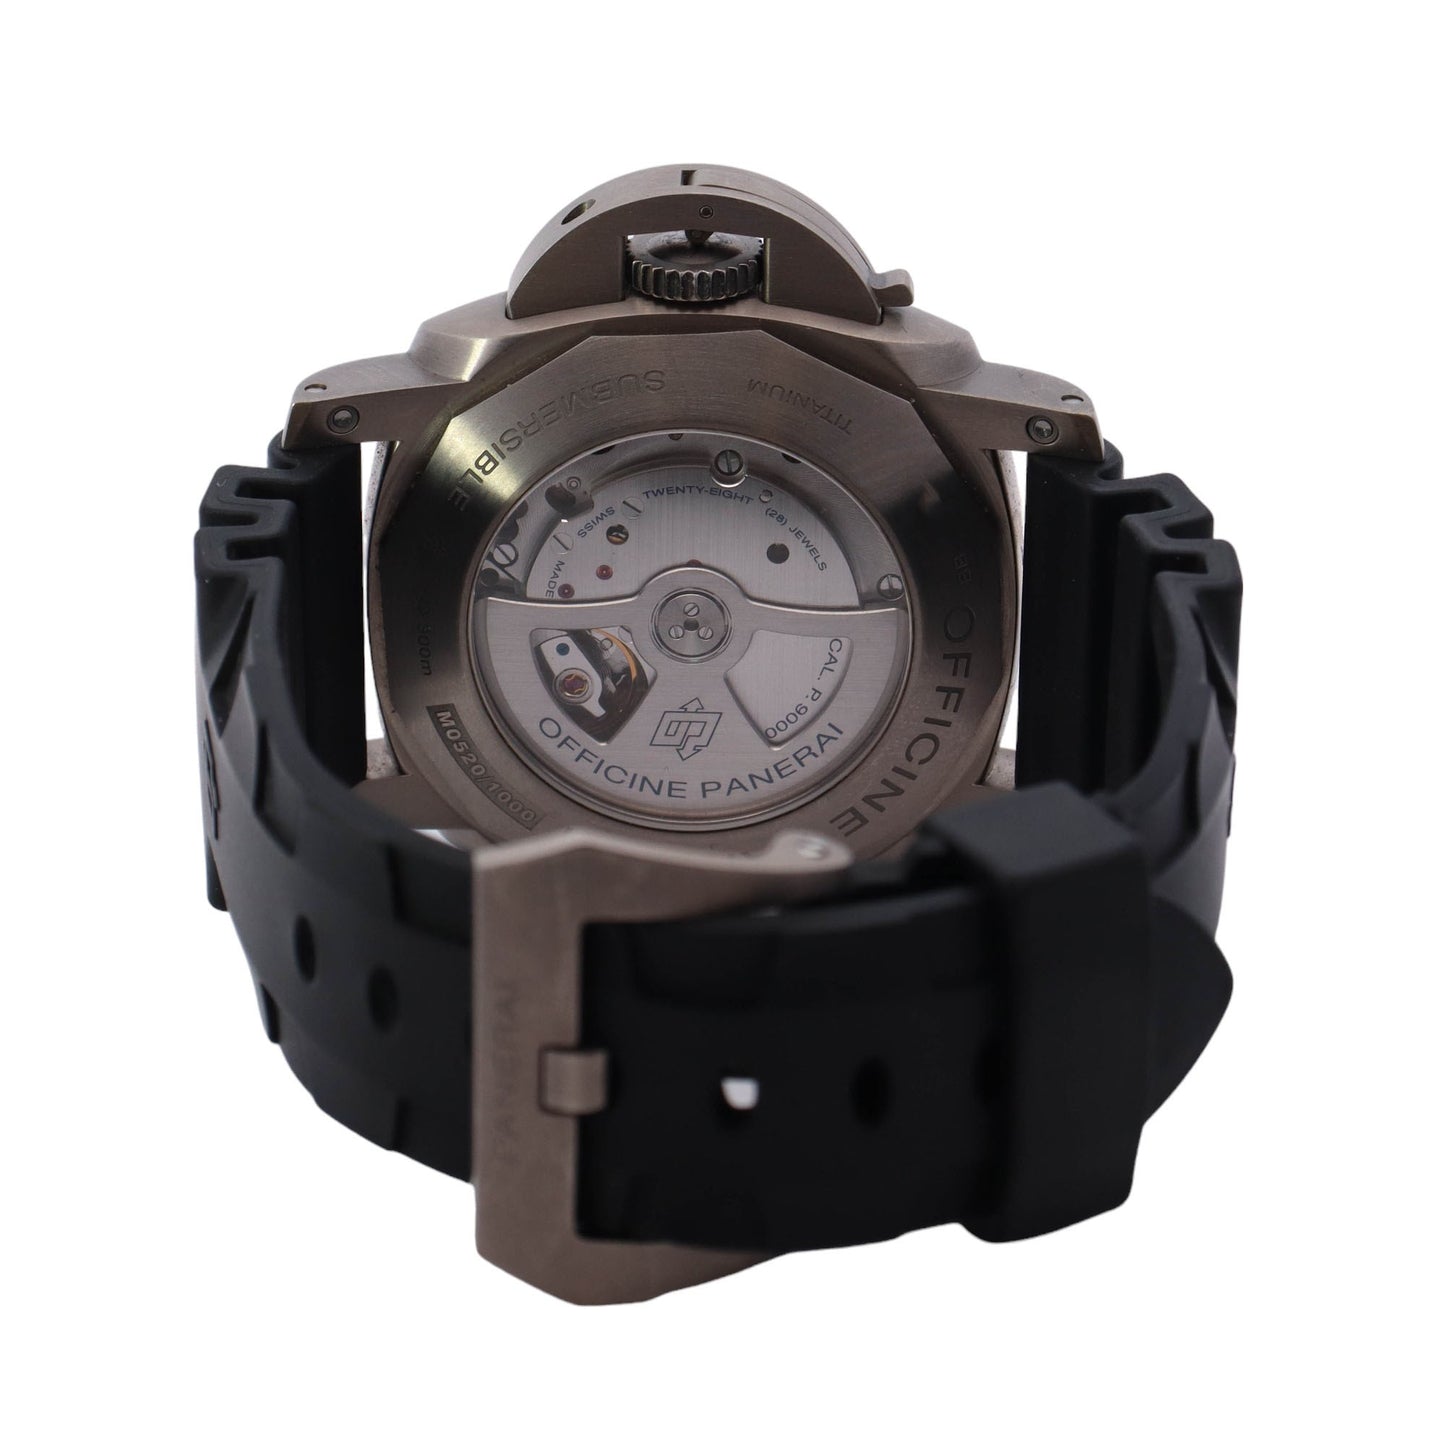 Panerai Luminor Submersible Titanium 47mm Black Dot Dial Watch Reference #: PAM00305